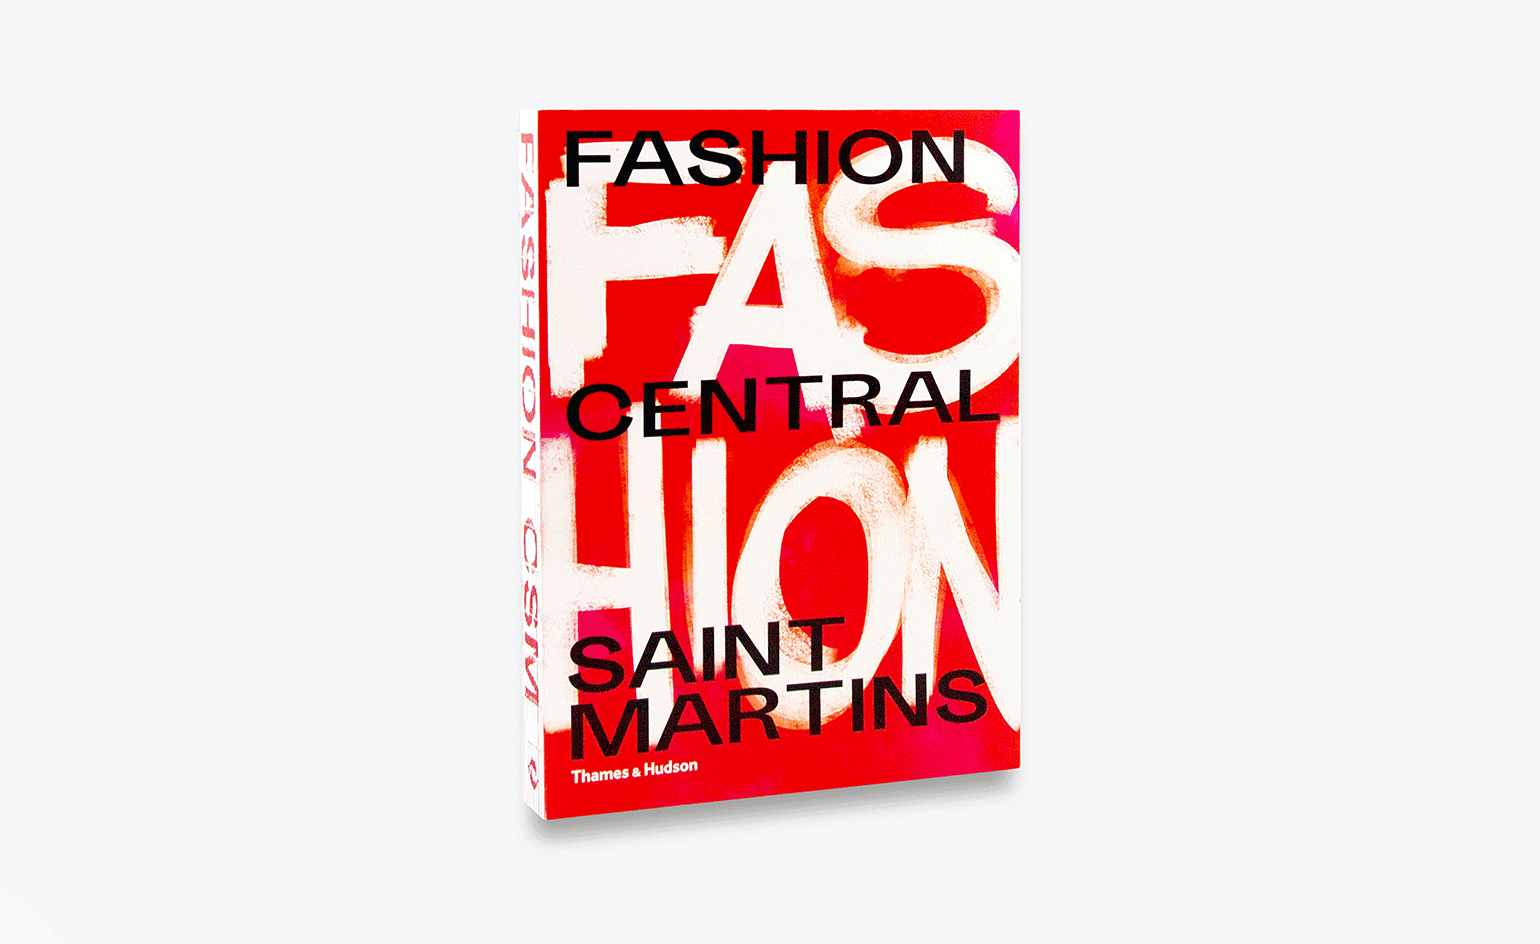 Fashion books Fashion Central Saint Martins front cover